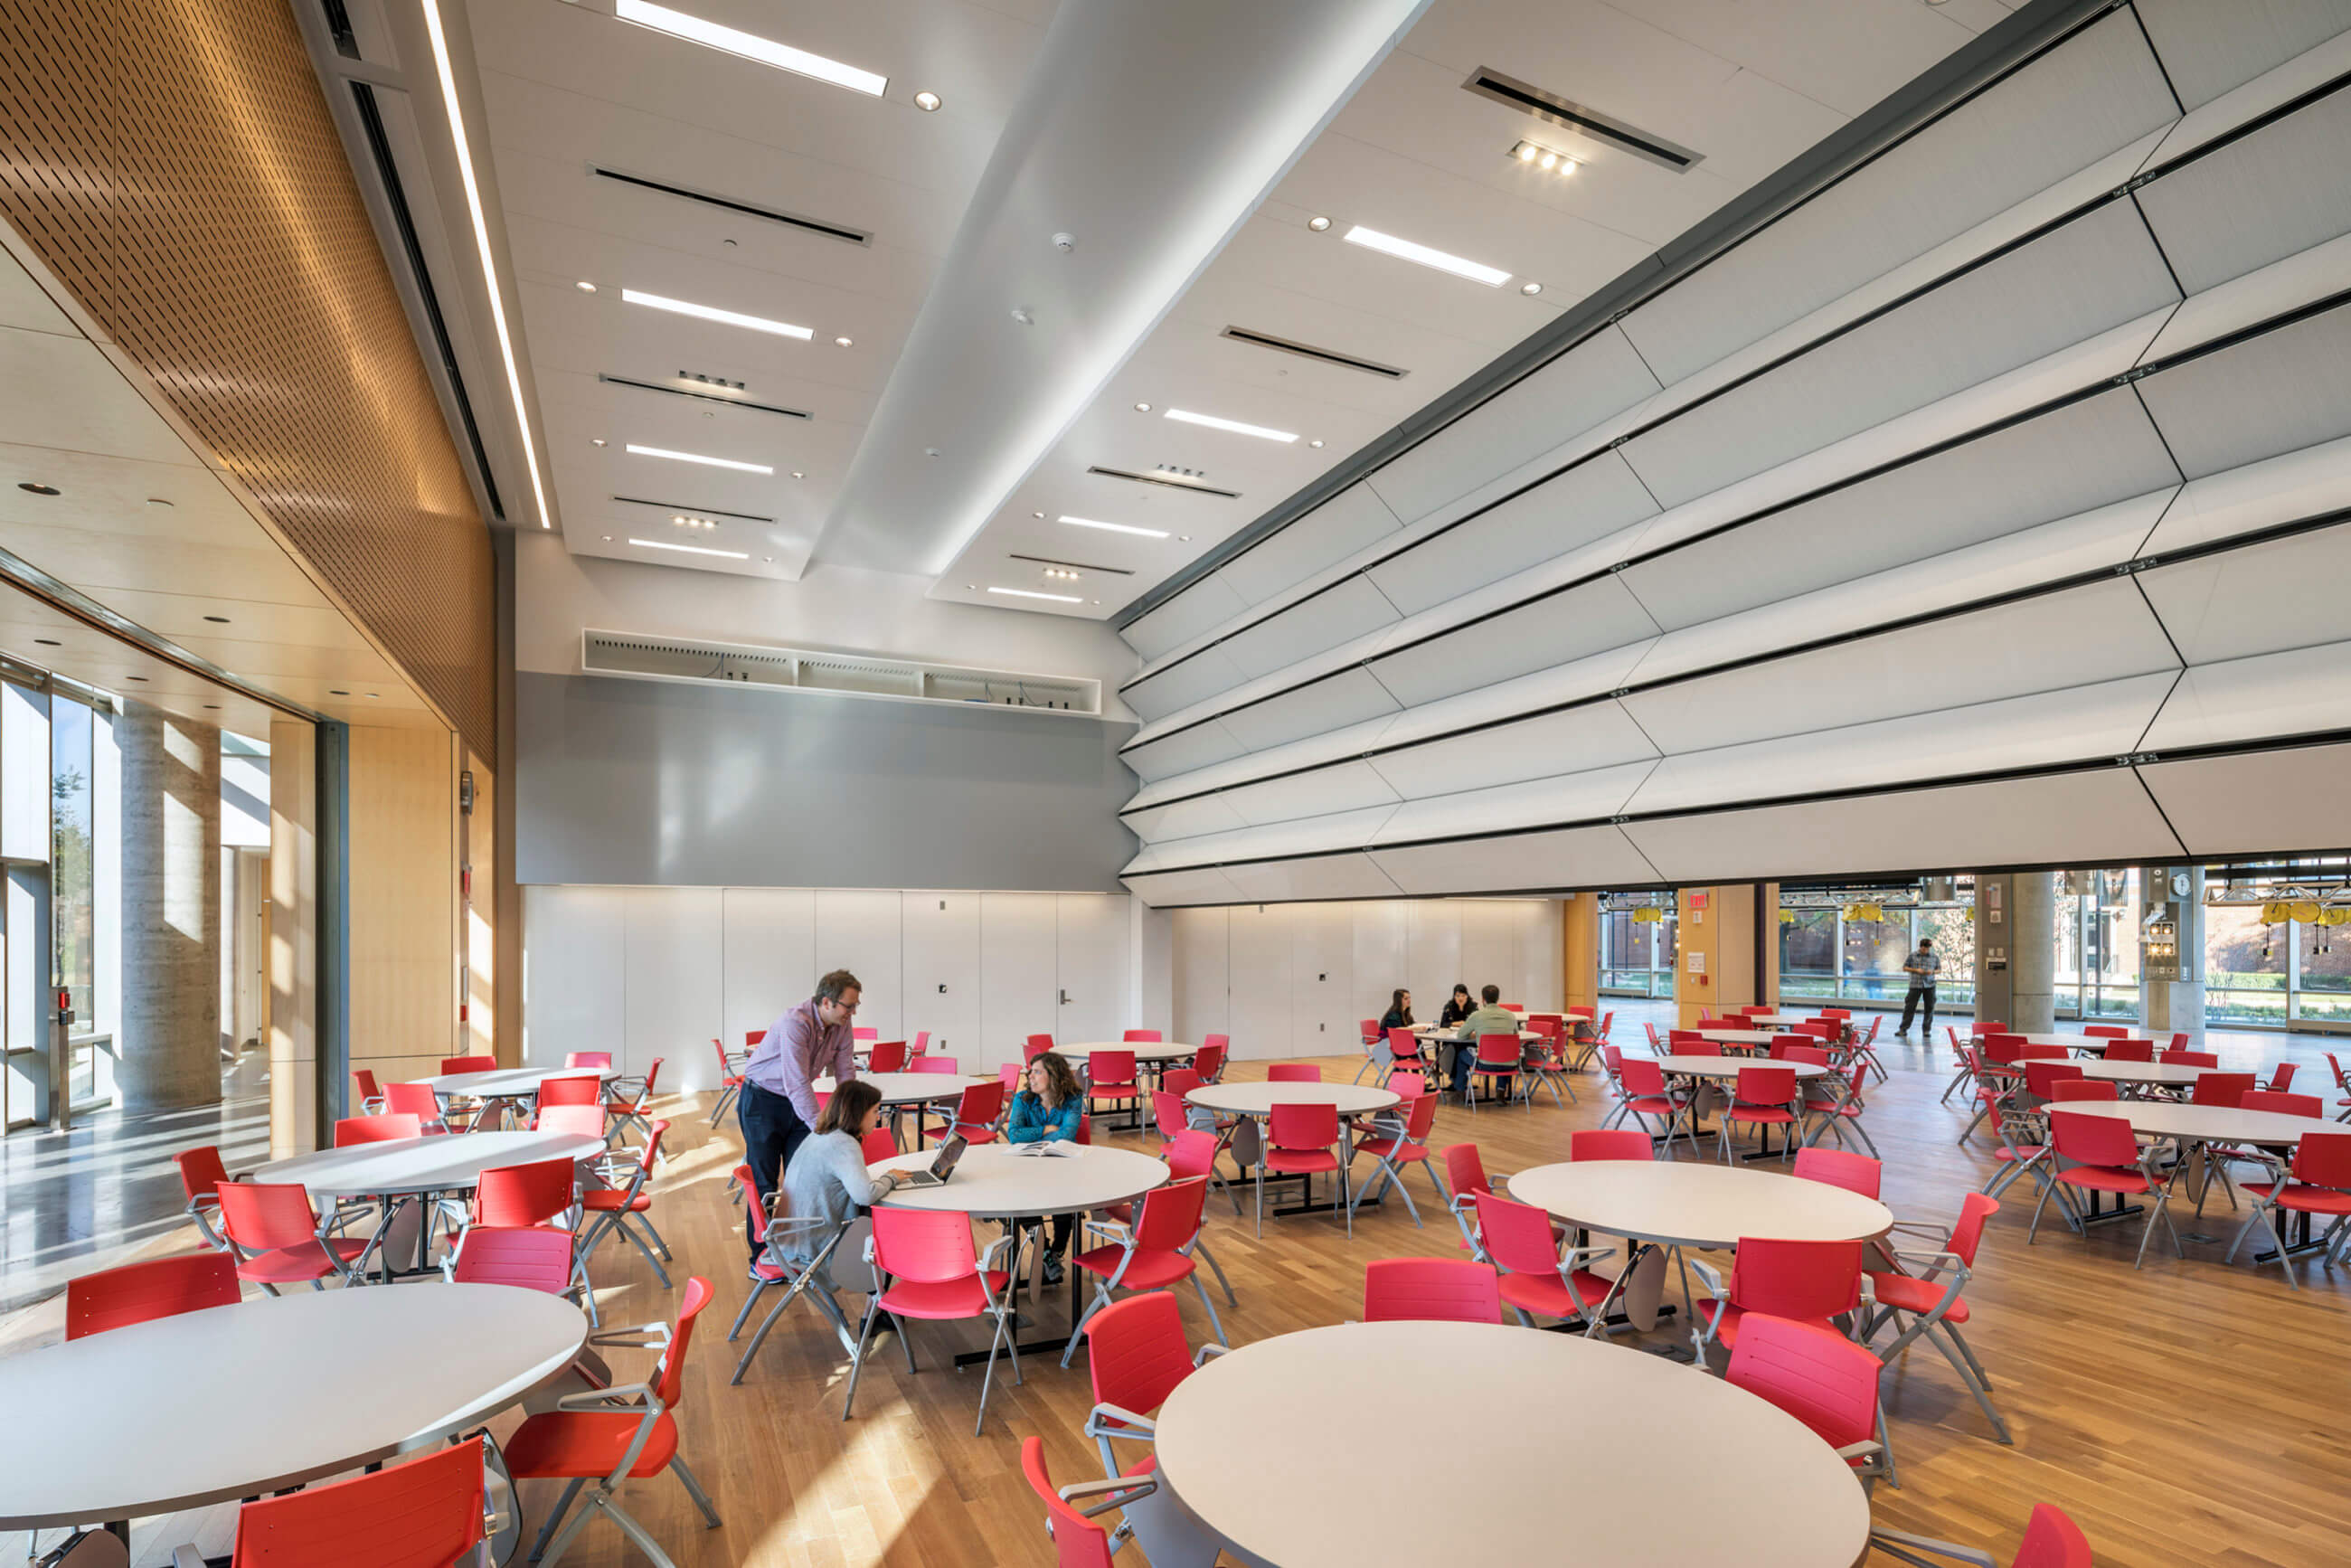 University of Maryland interior designs and lighting